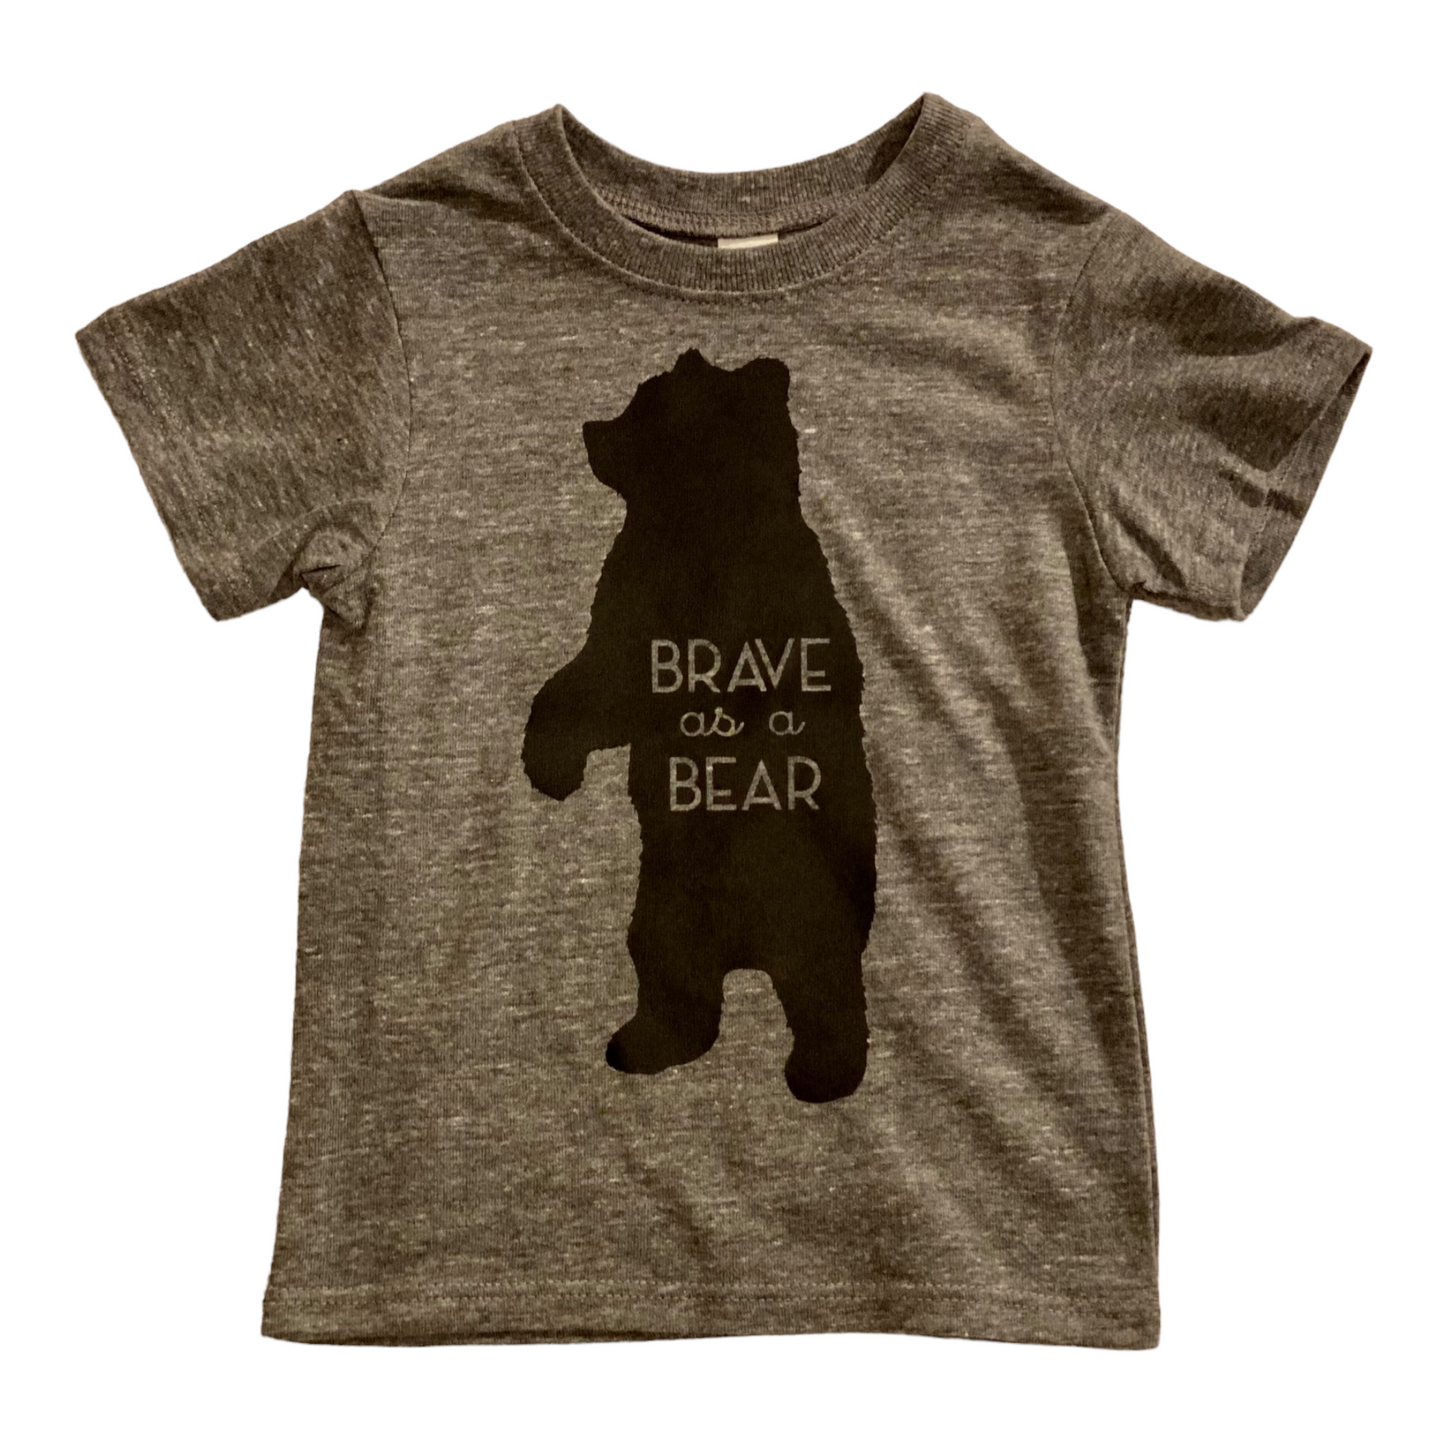 "Brave as a Bear" Toddler Tee